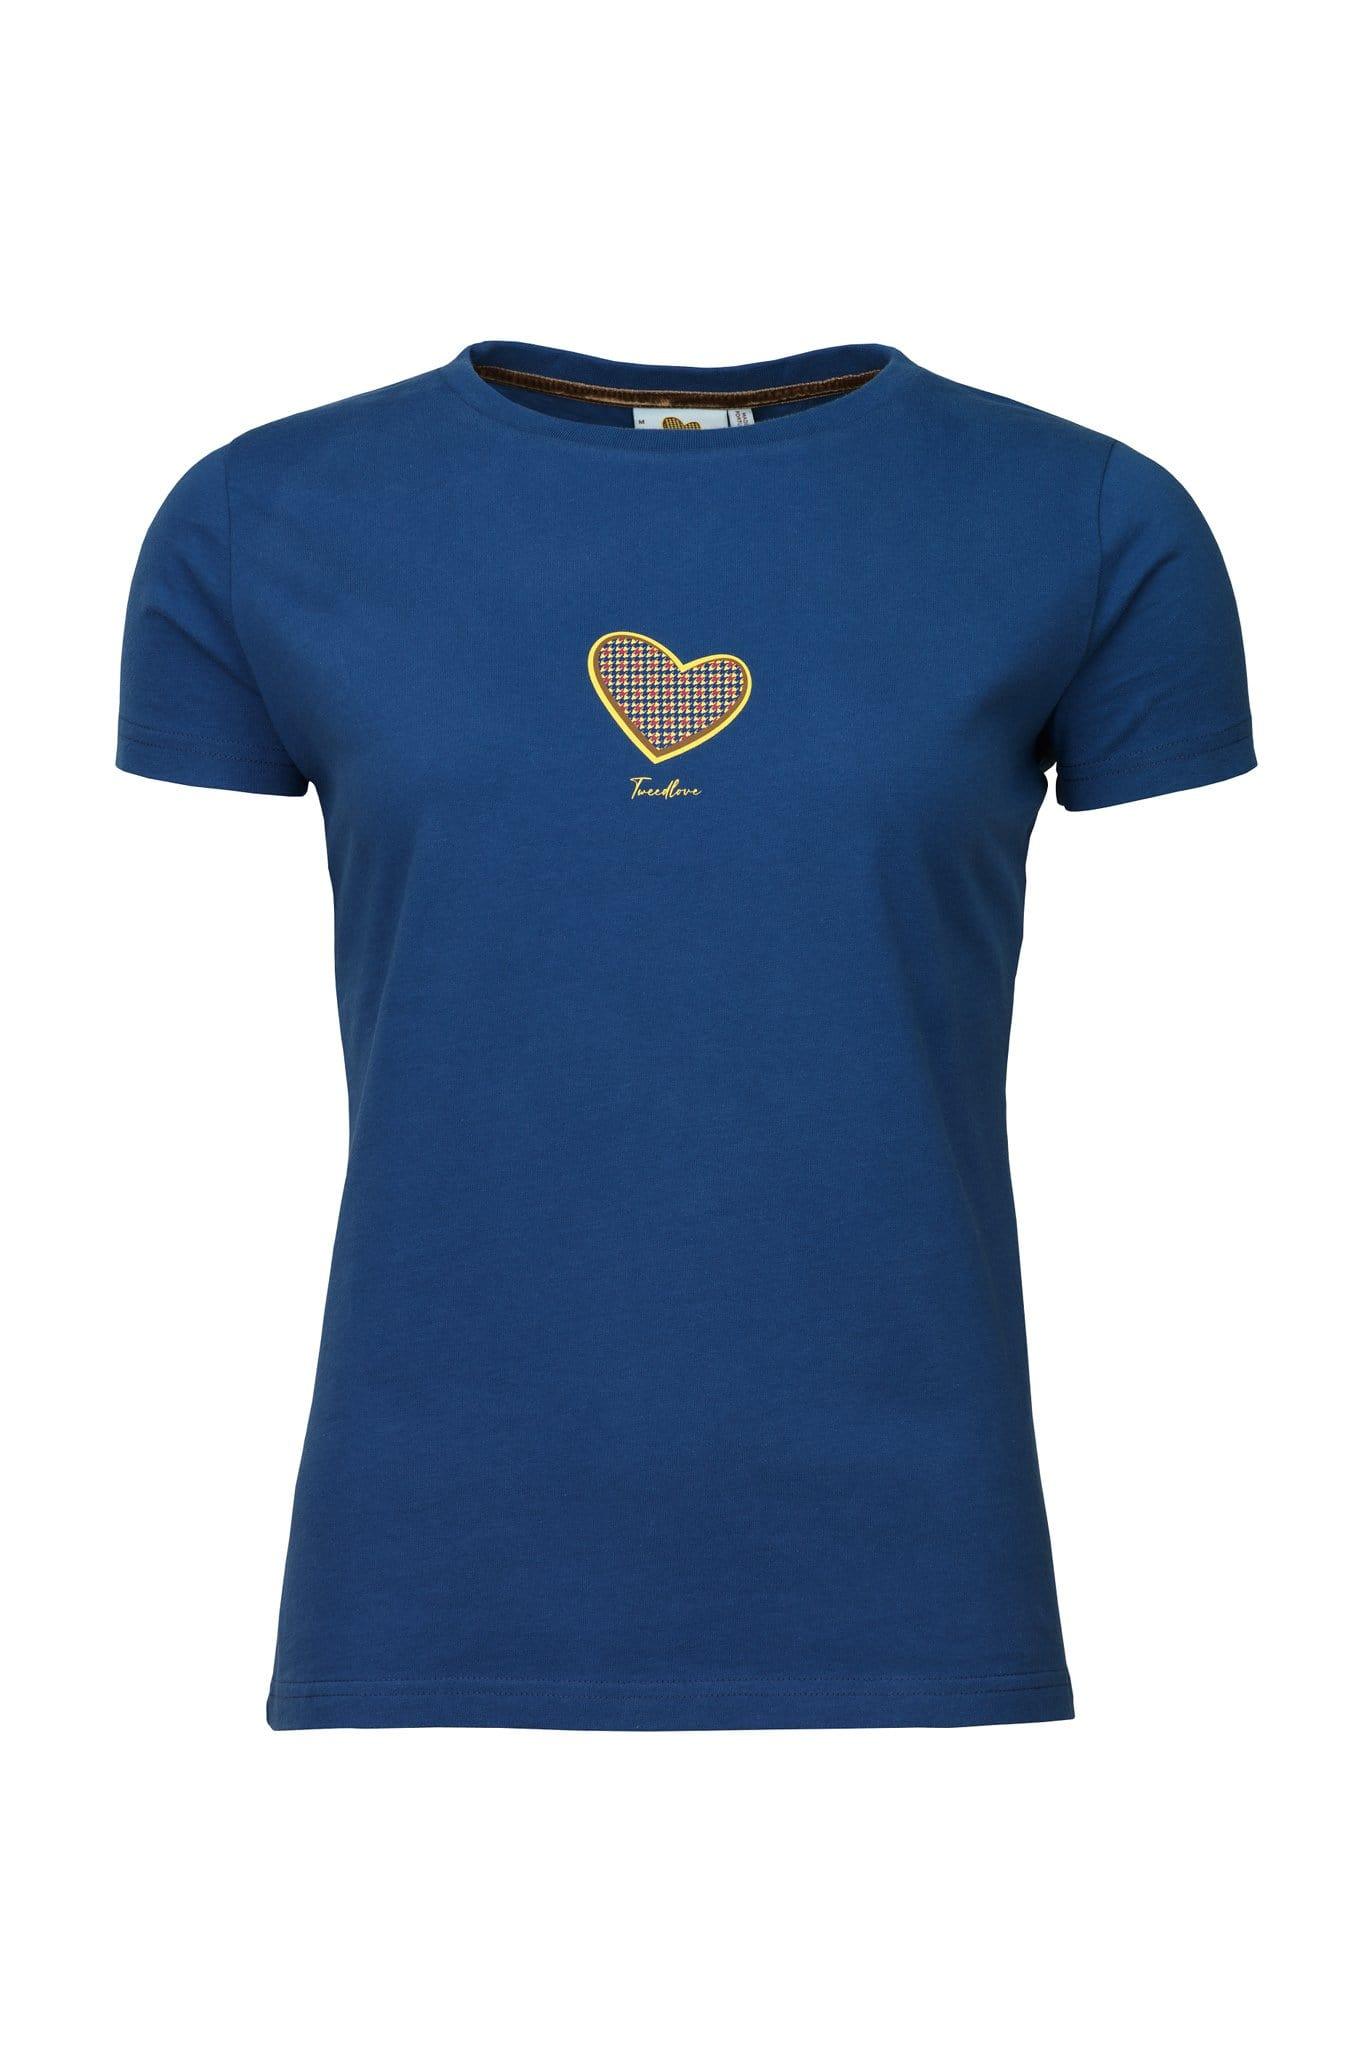 Tweedlove Shirts Tweedlove Womens Tee Heartfull Slate Blue